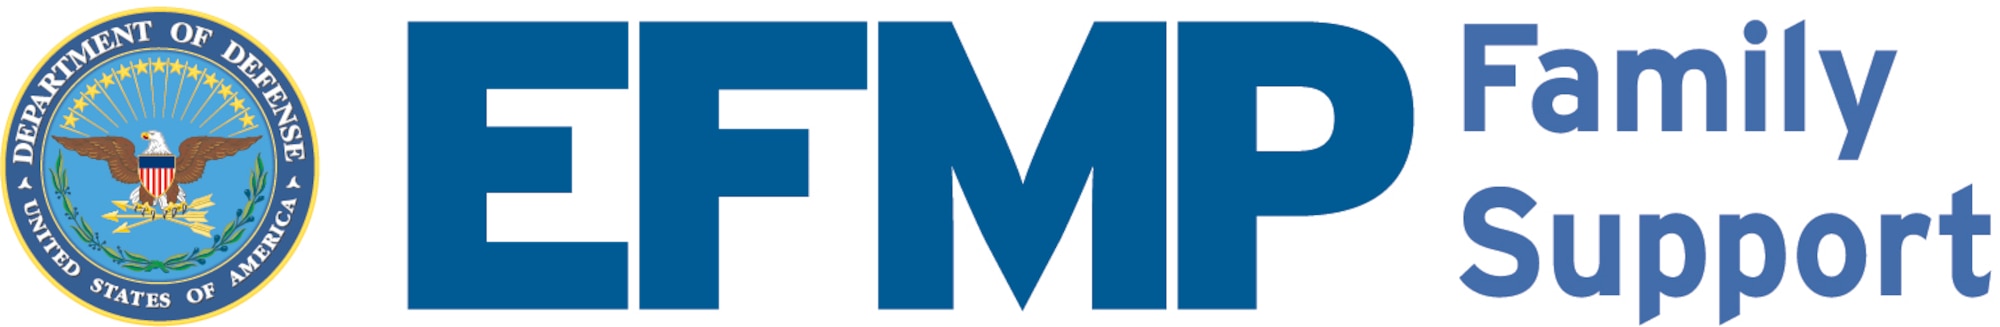 Exceptional Family Member Program (EFMP) logo